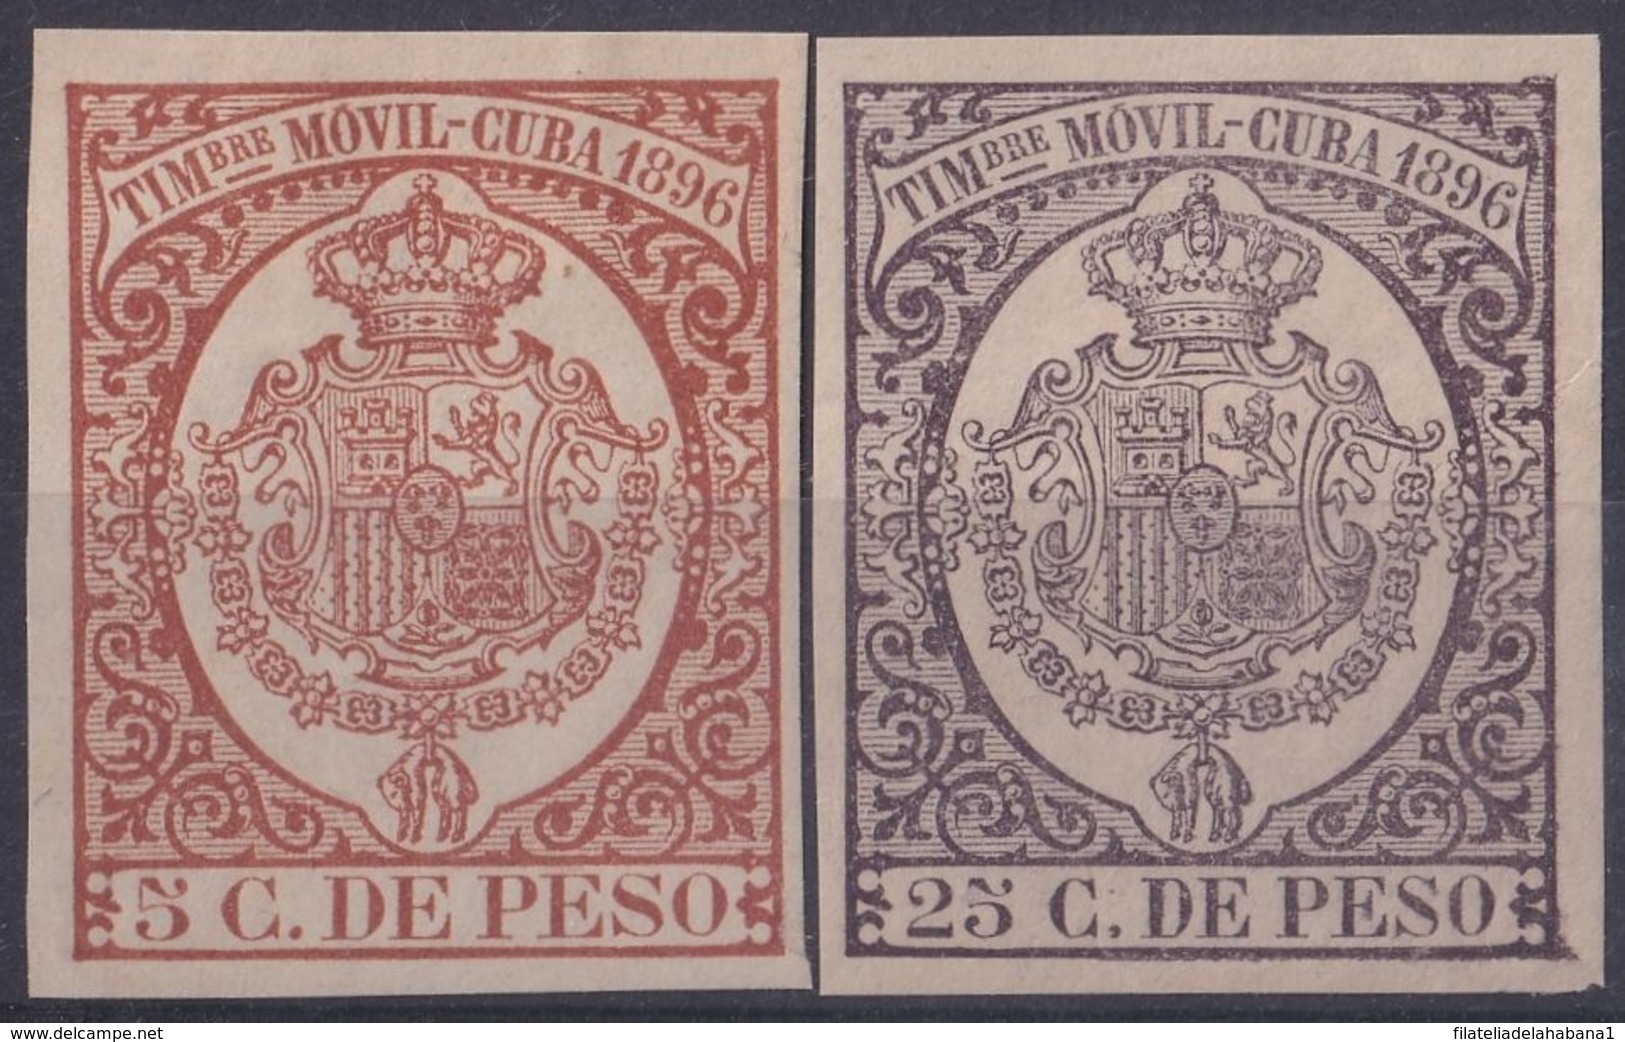 TMO-98 CUBA SPAIN REVENUE TIMBRE MOVIL 1896 COMPLETE SET UNUSED. - Postage Due